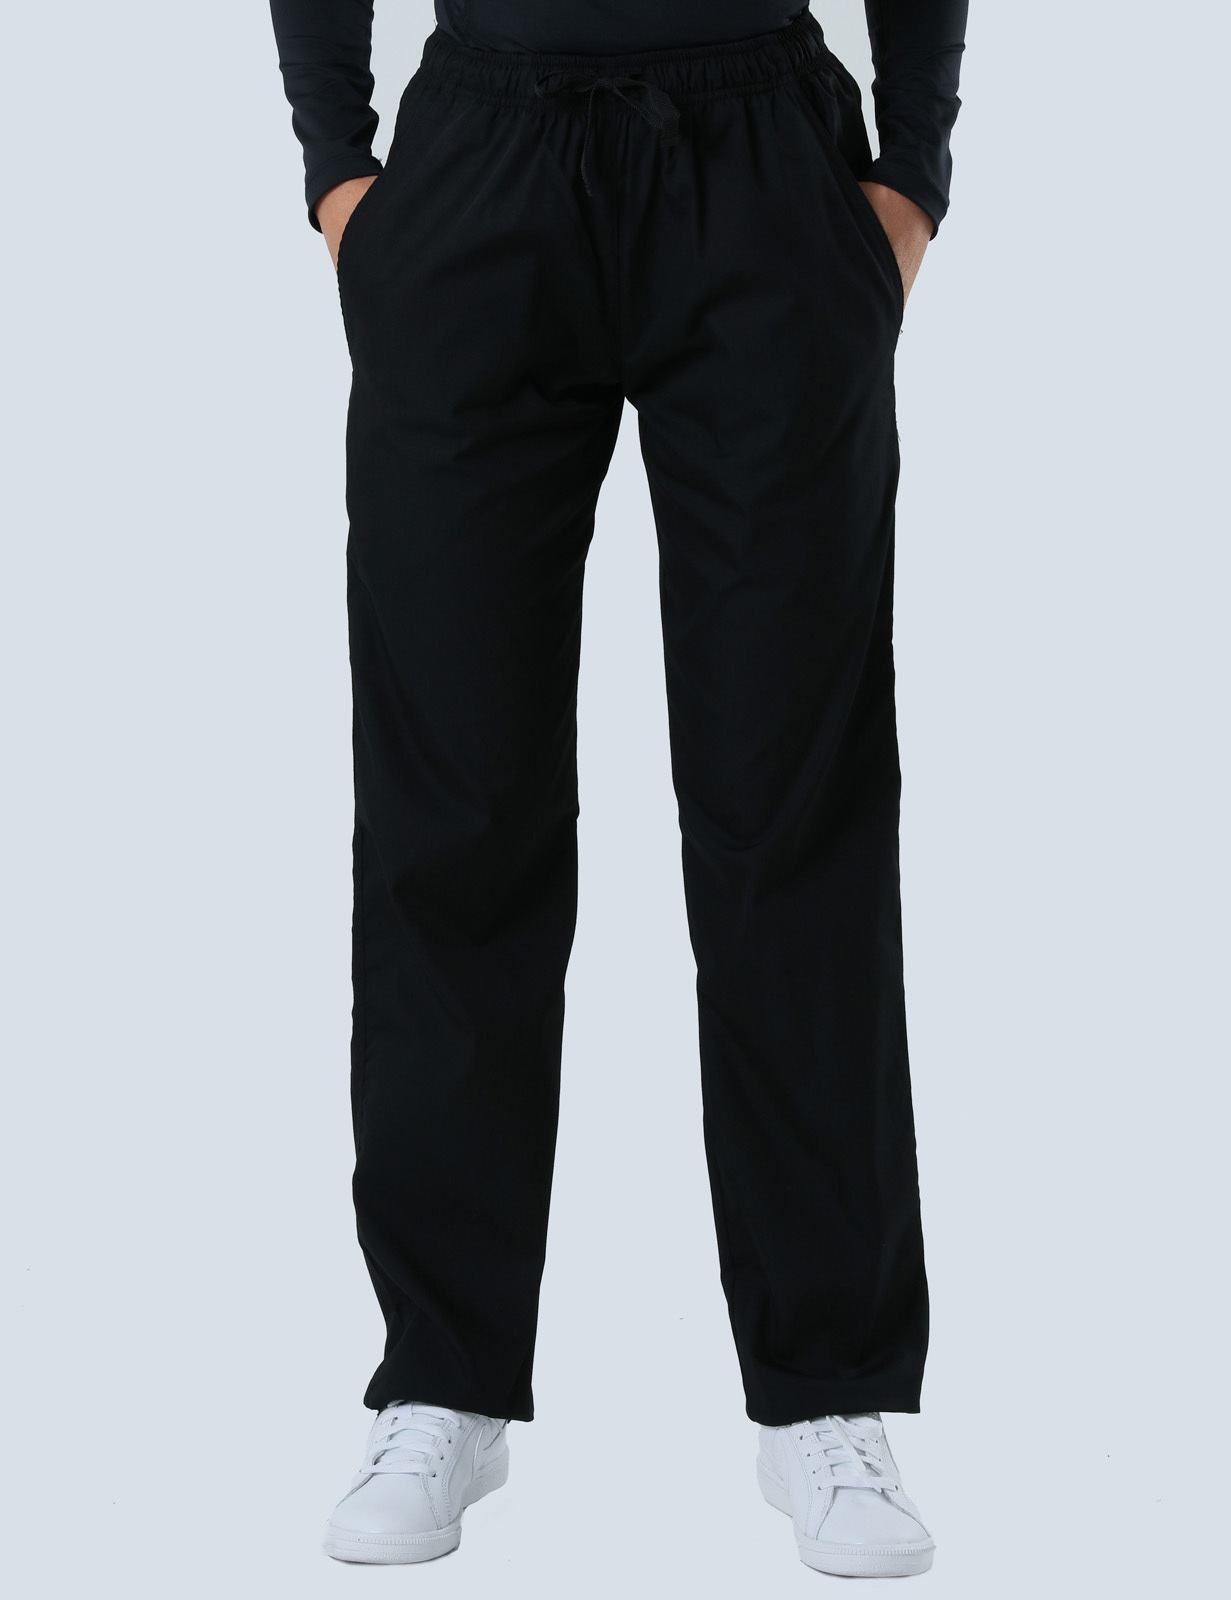 Women's Utility Pants - Black - 4X large